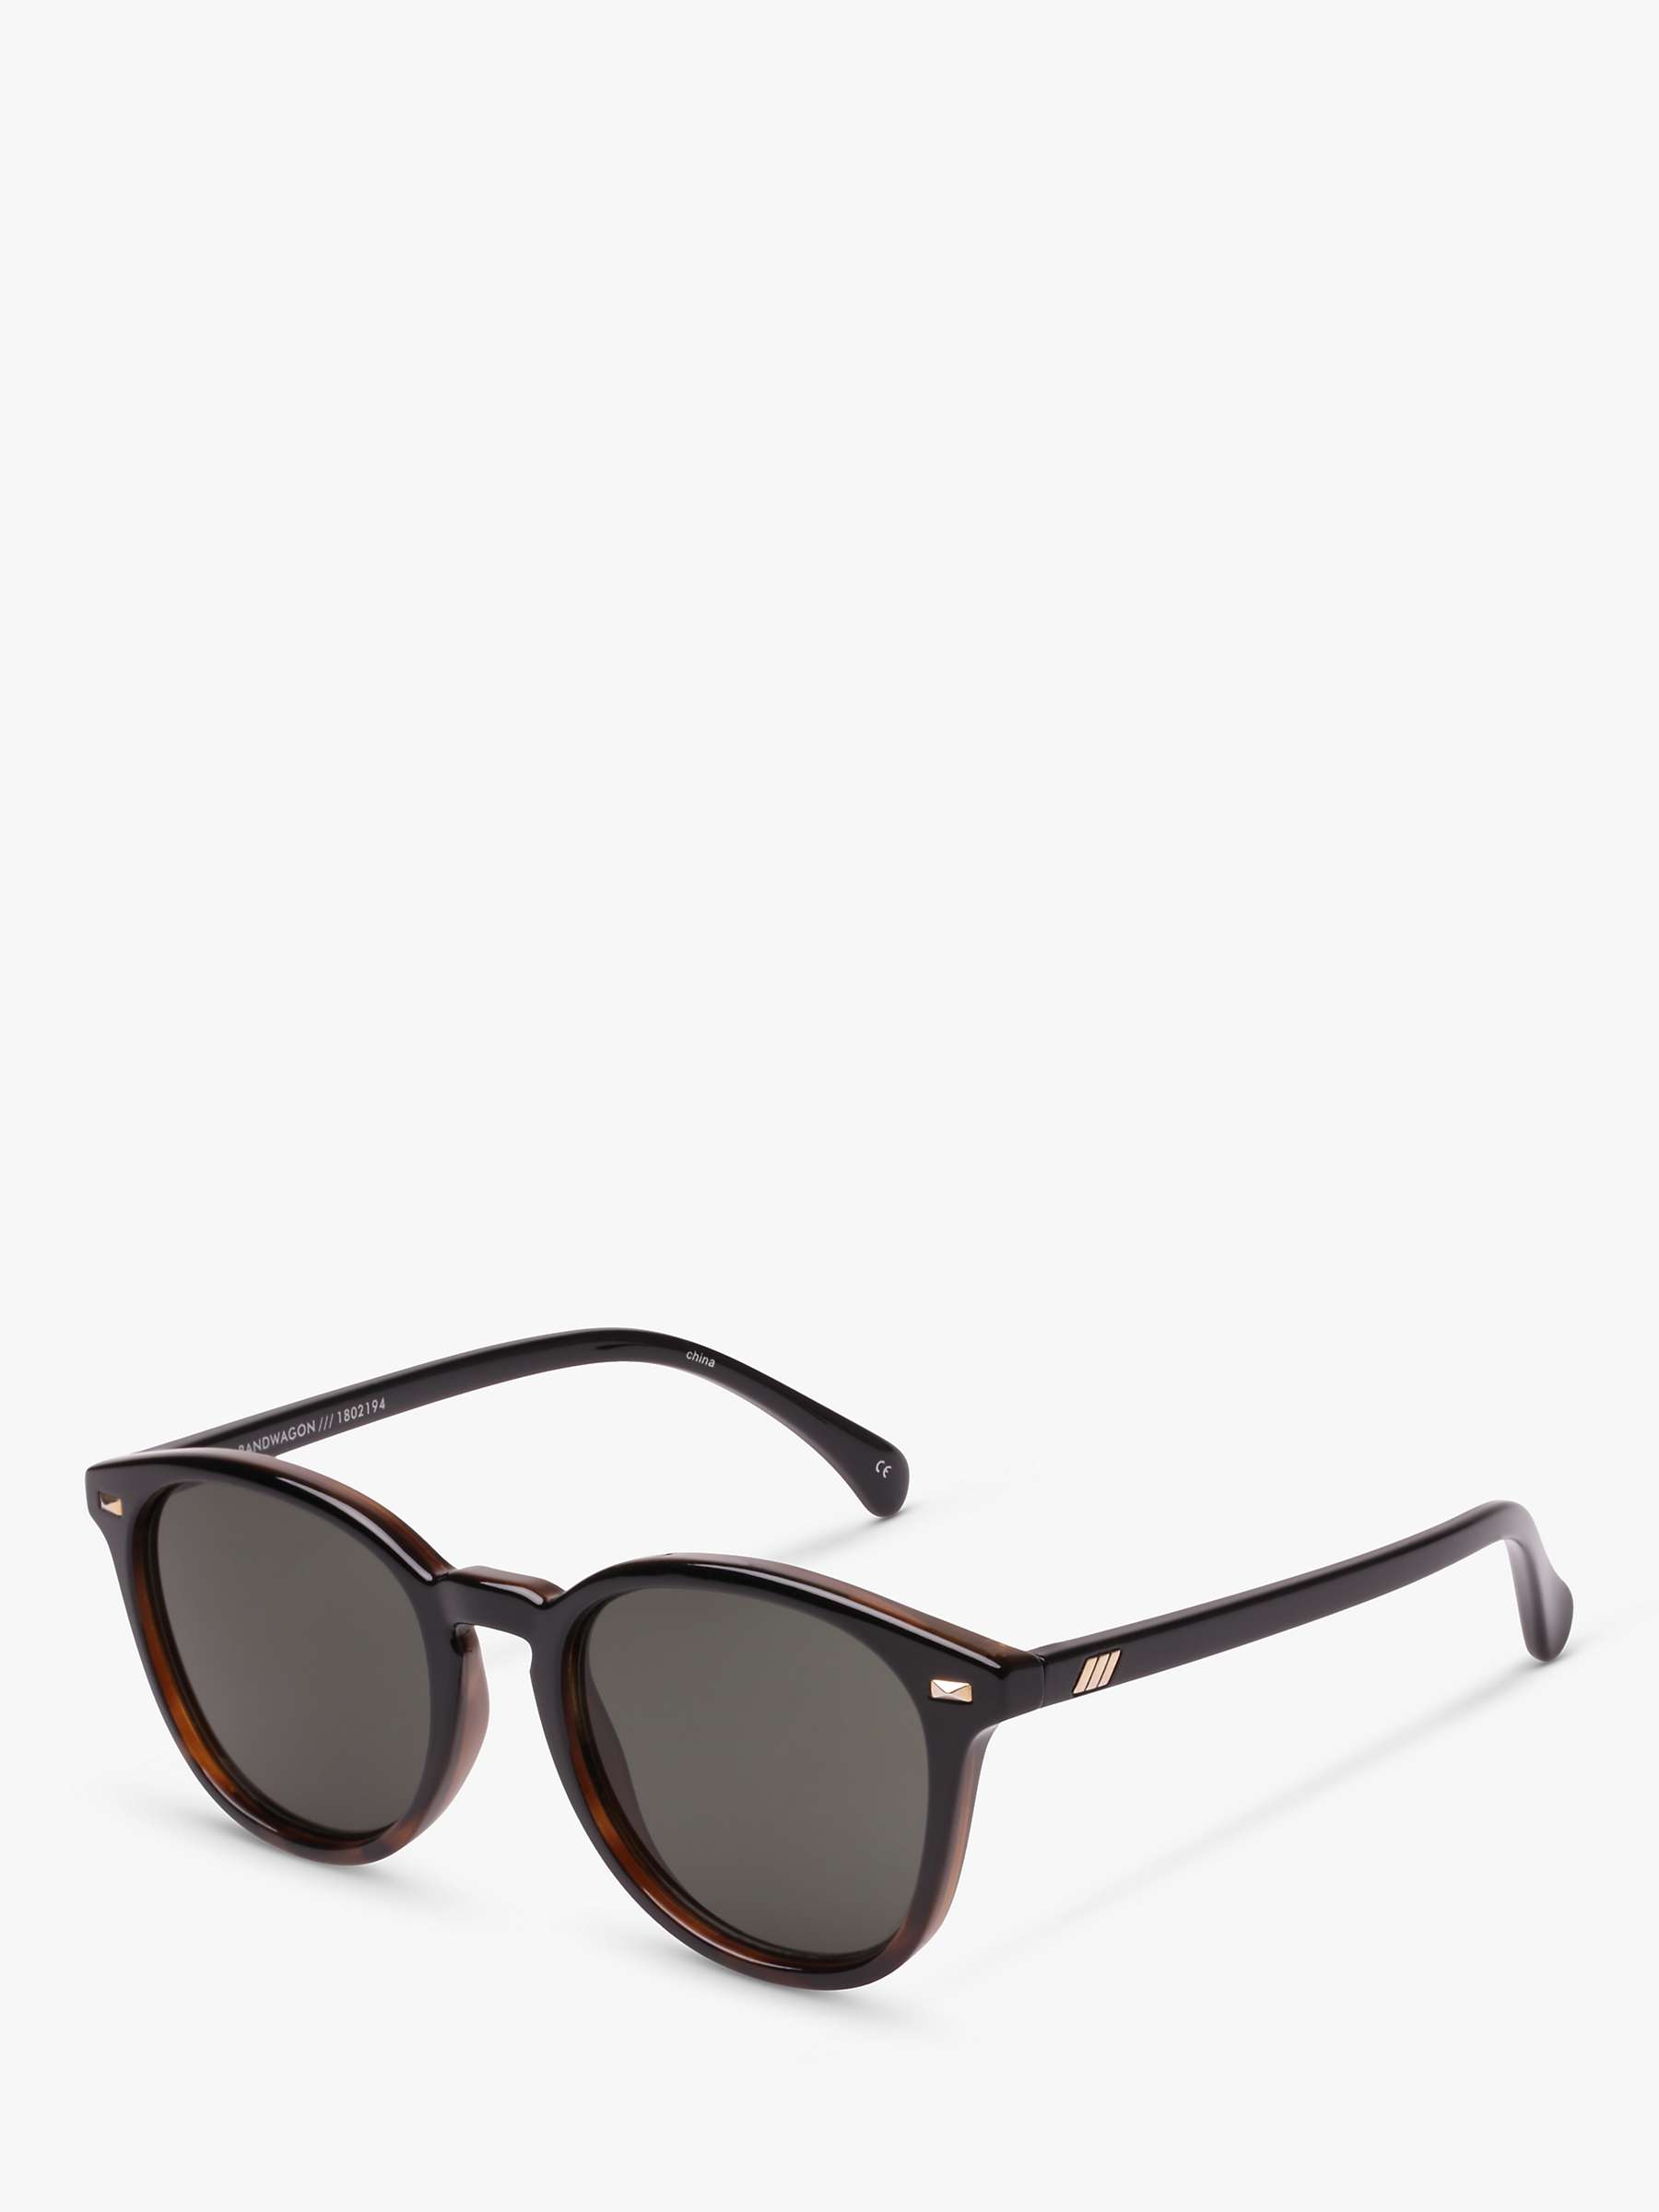 Buy Le Specs Unisex Bandwagon Round Sunglasses Online at johnlewis.com